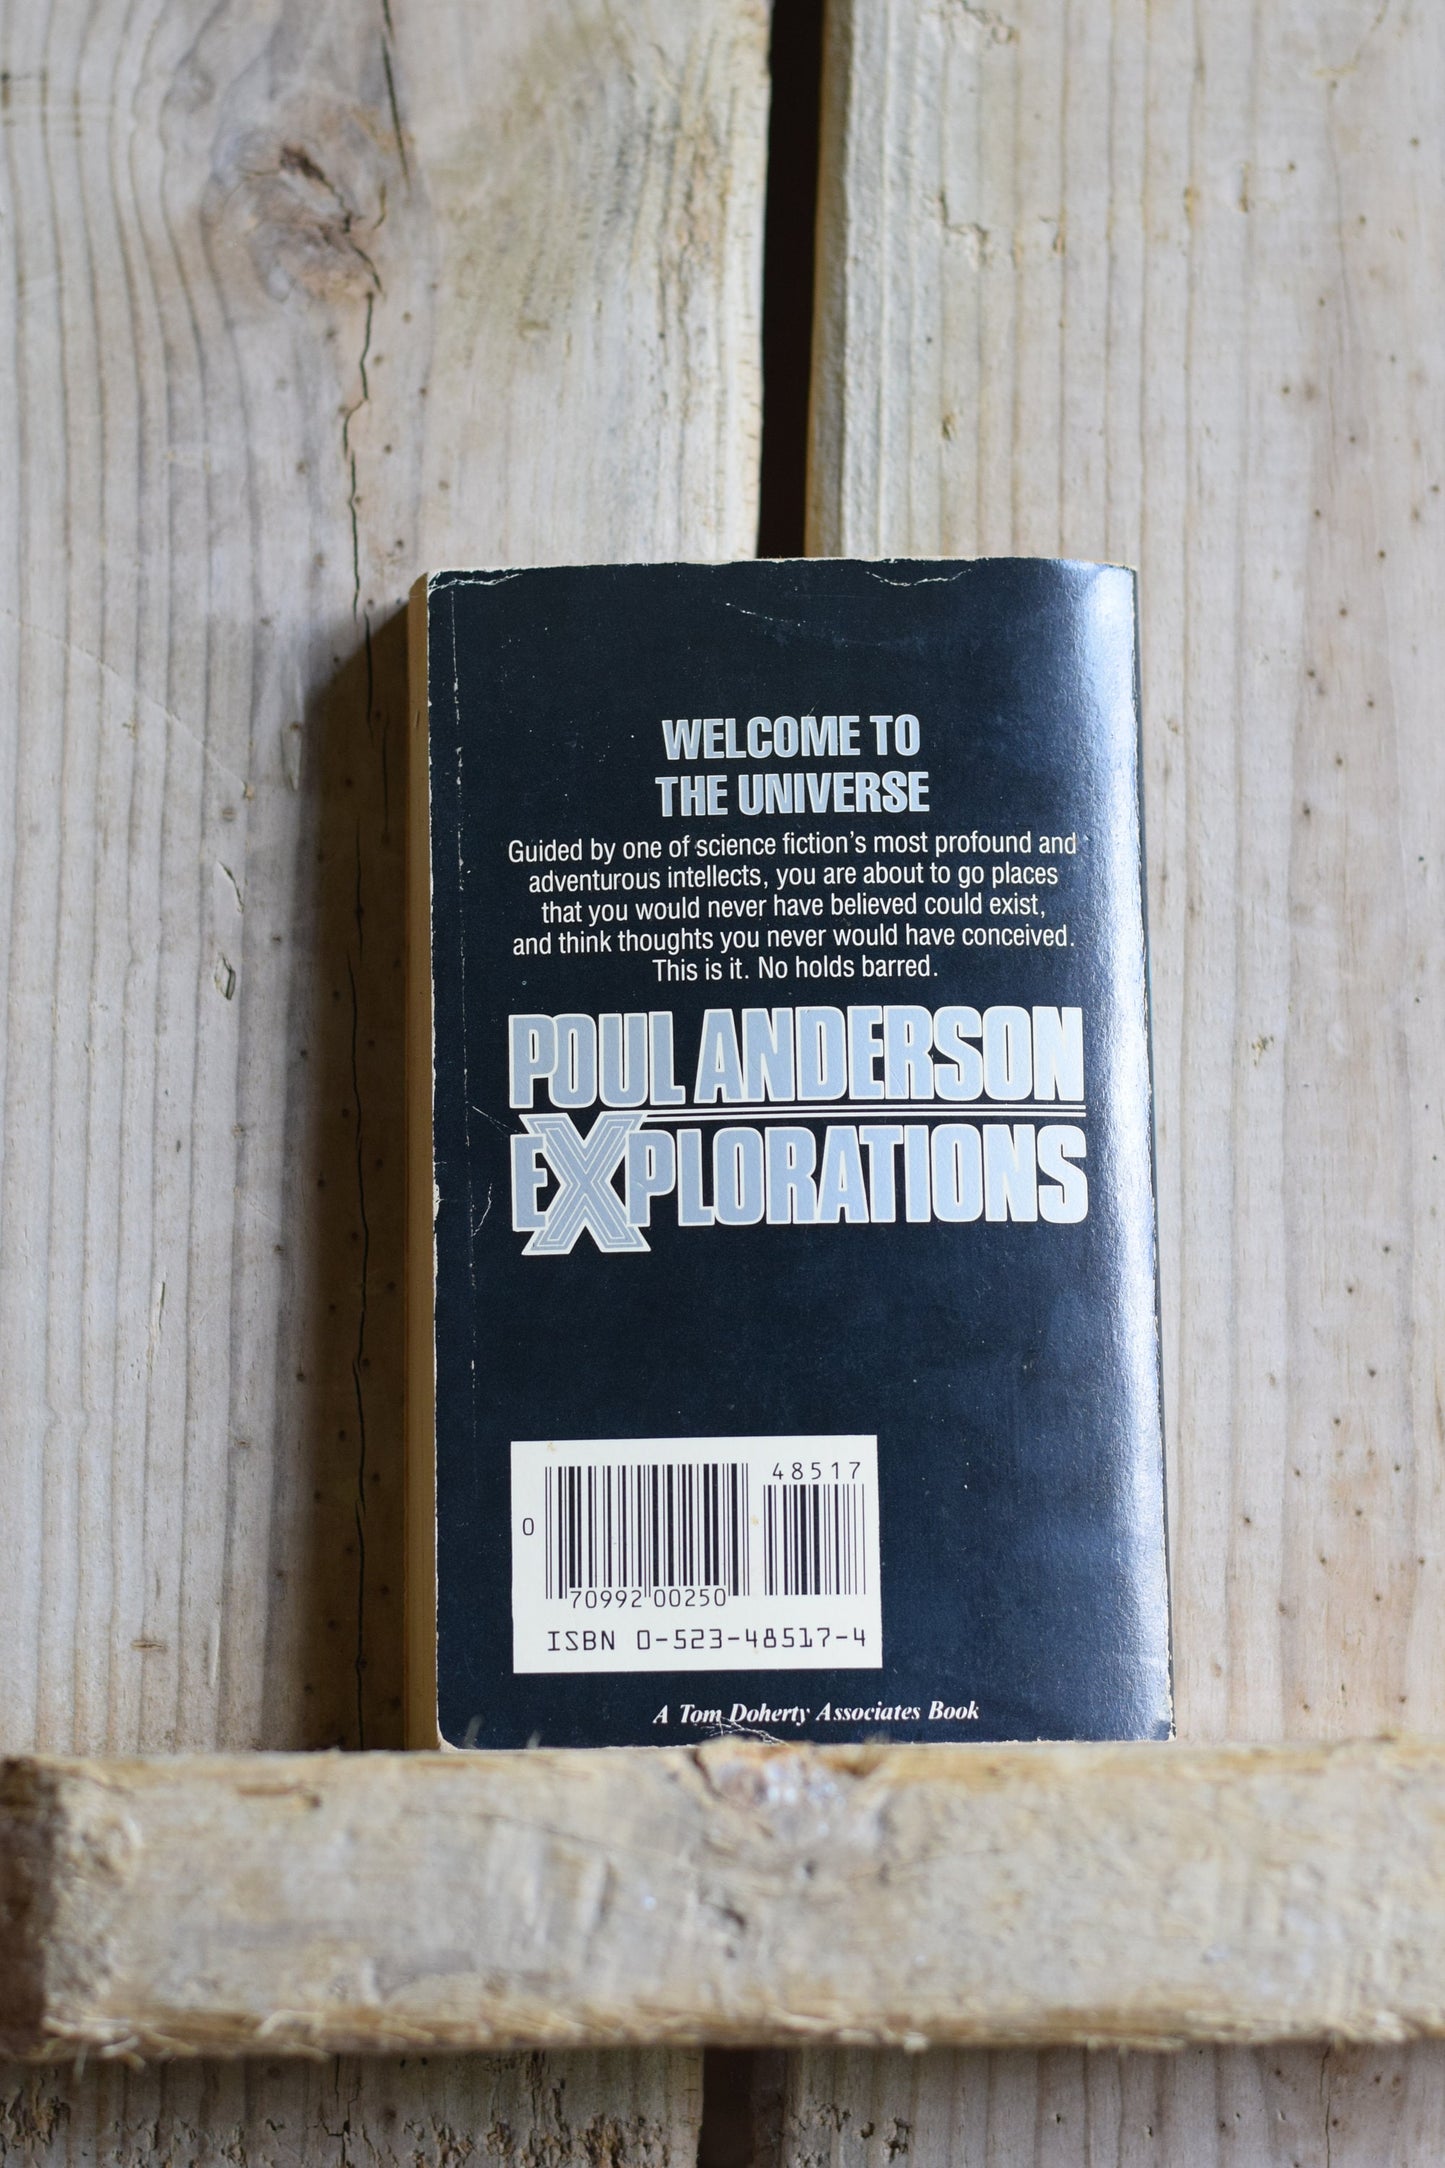 Vintage Sci-fi Paperback Novel: Poul Anderson - Explorations